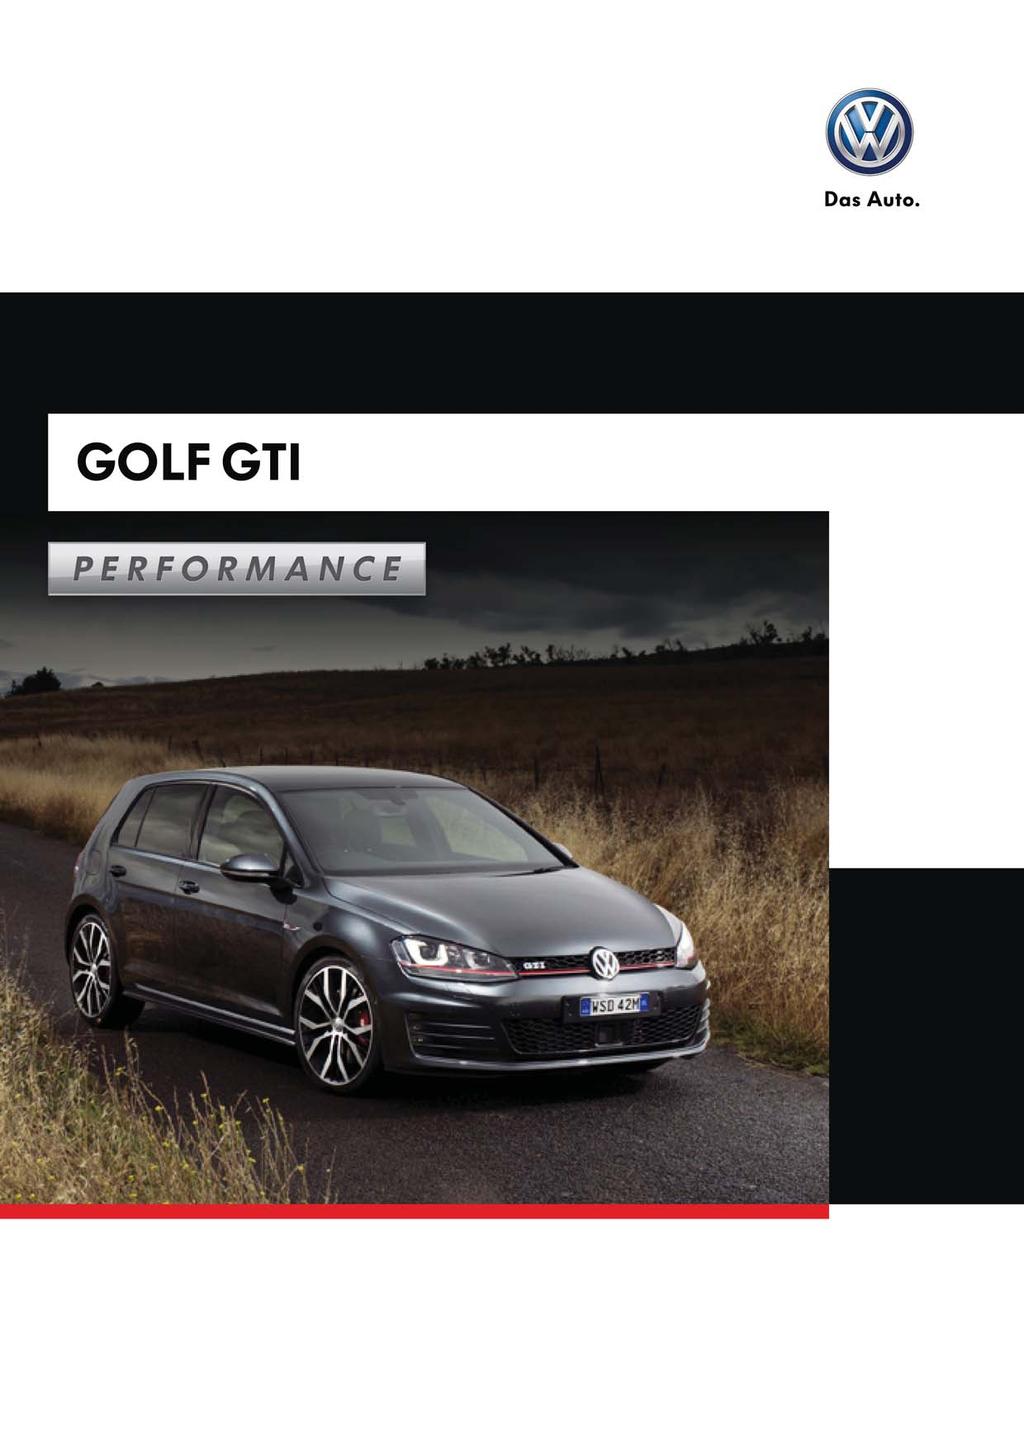 The new Golf GTI Performance / Australian